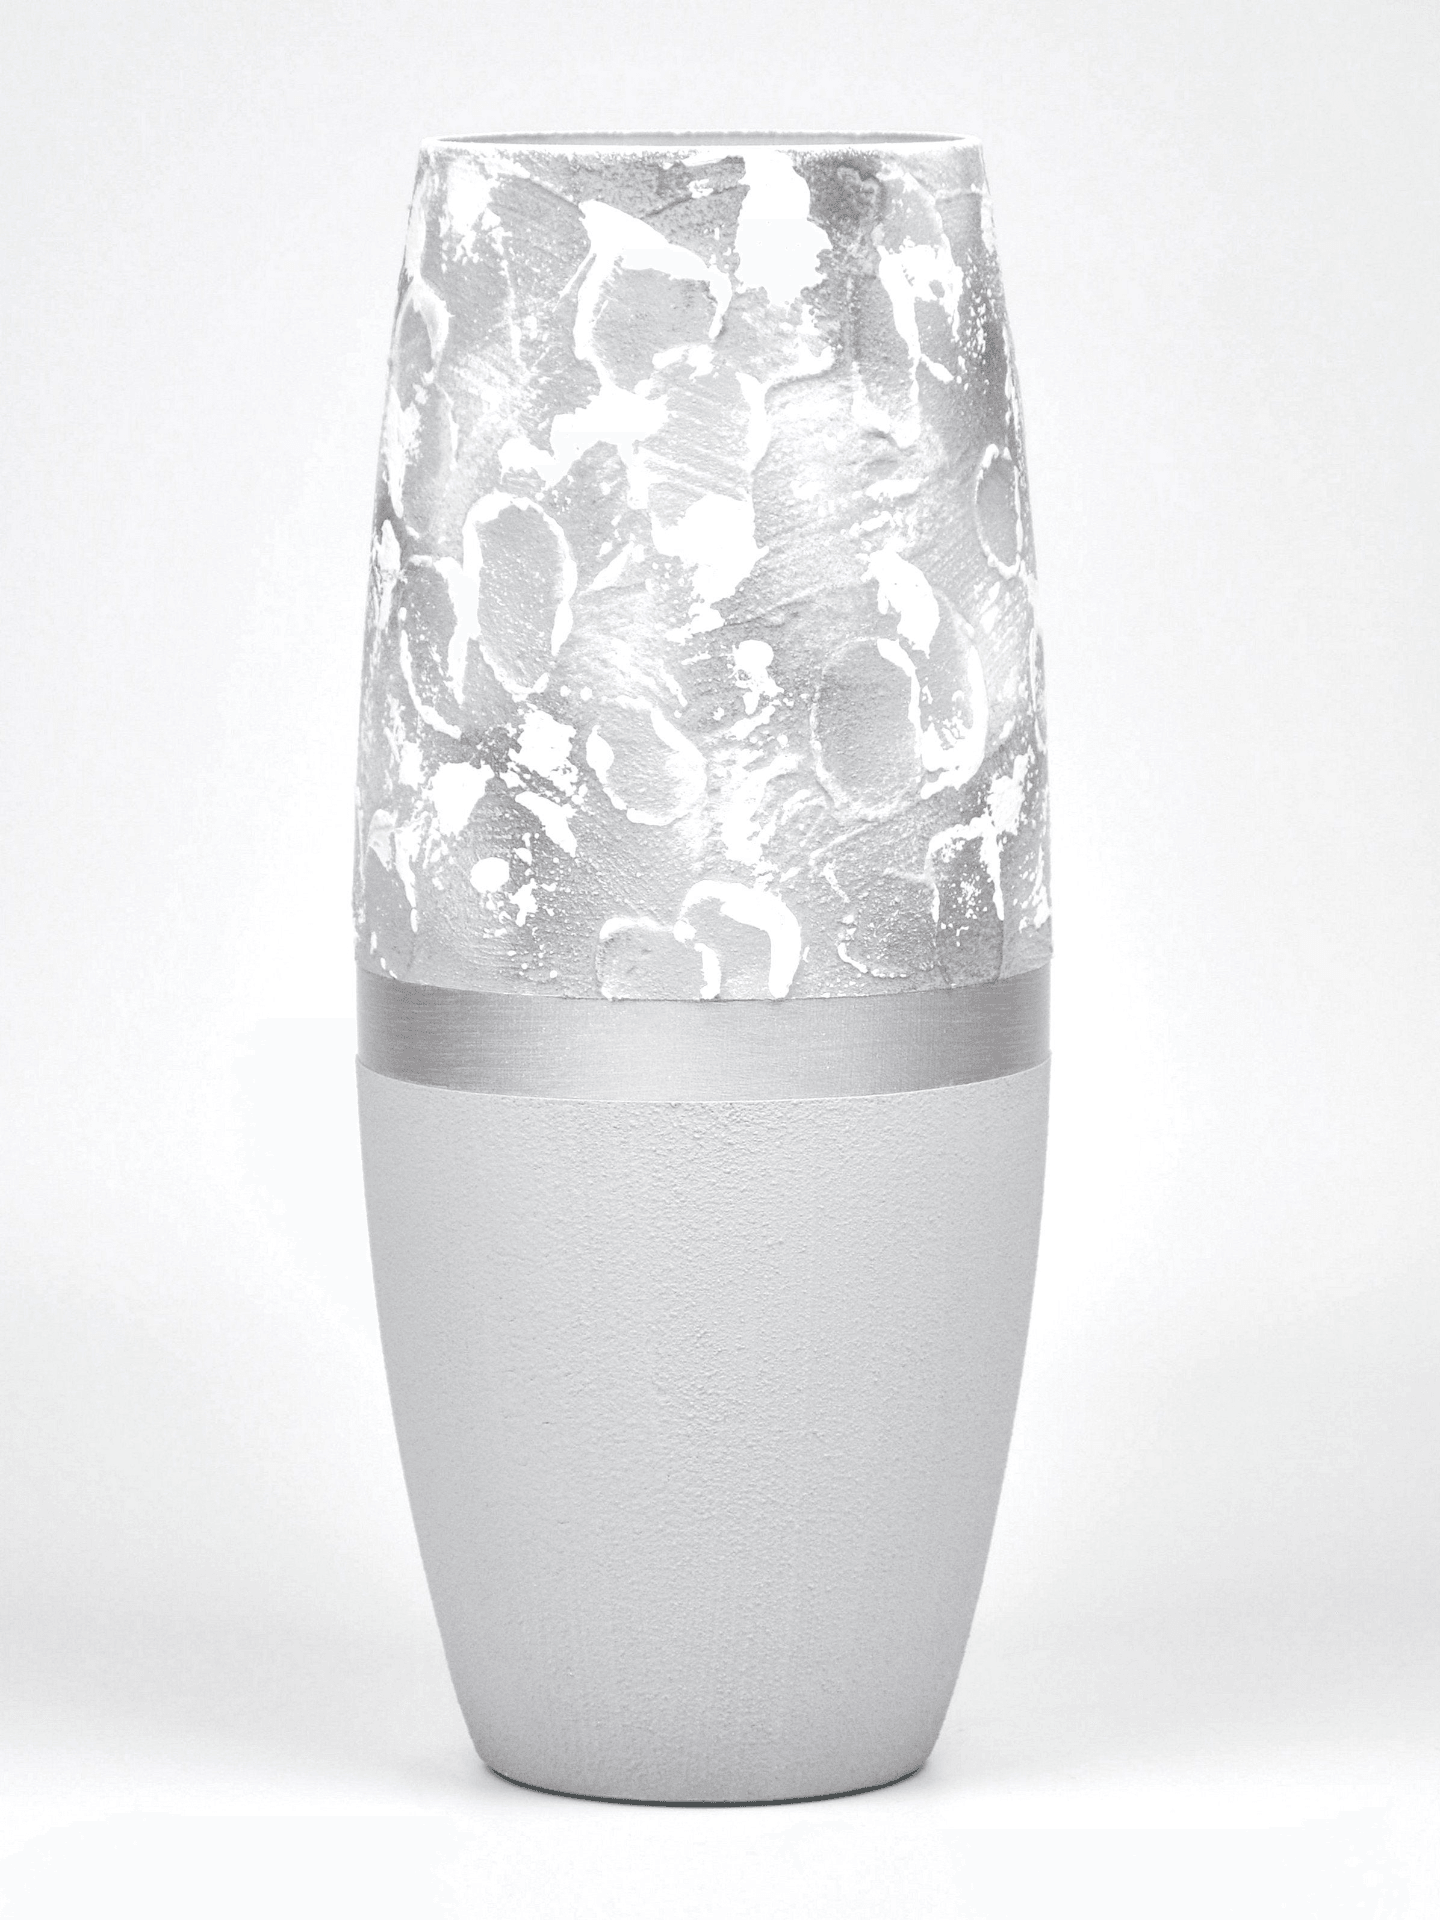 Marble Imitation Painted Art Glass Oval Vase for Flowers | Interior Design | Home Decor | Table vase | 7736/250/sh106  